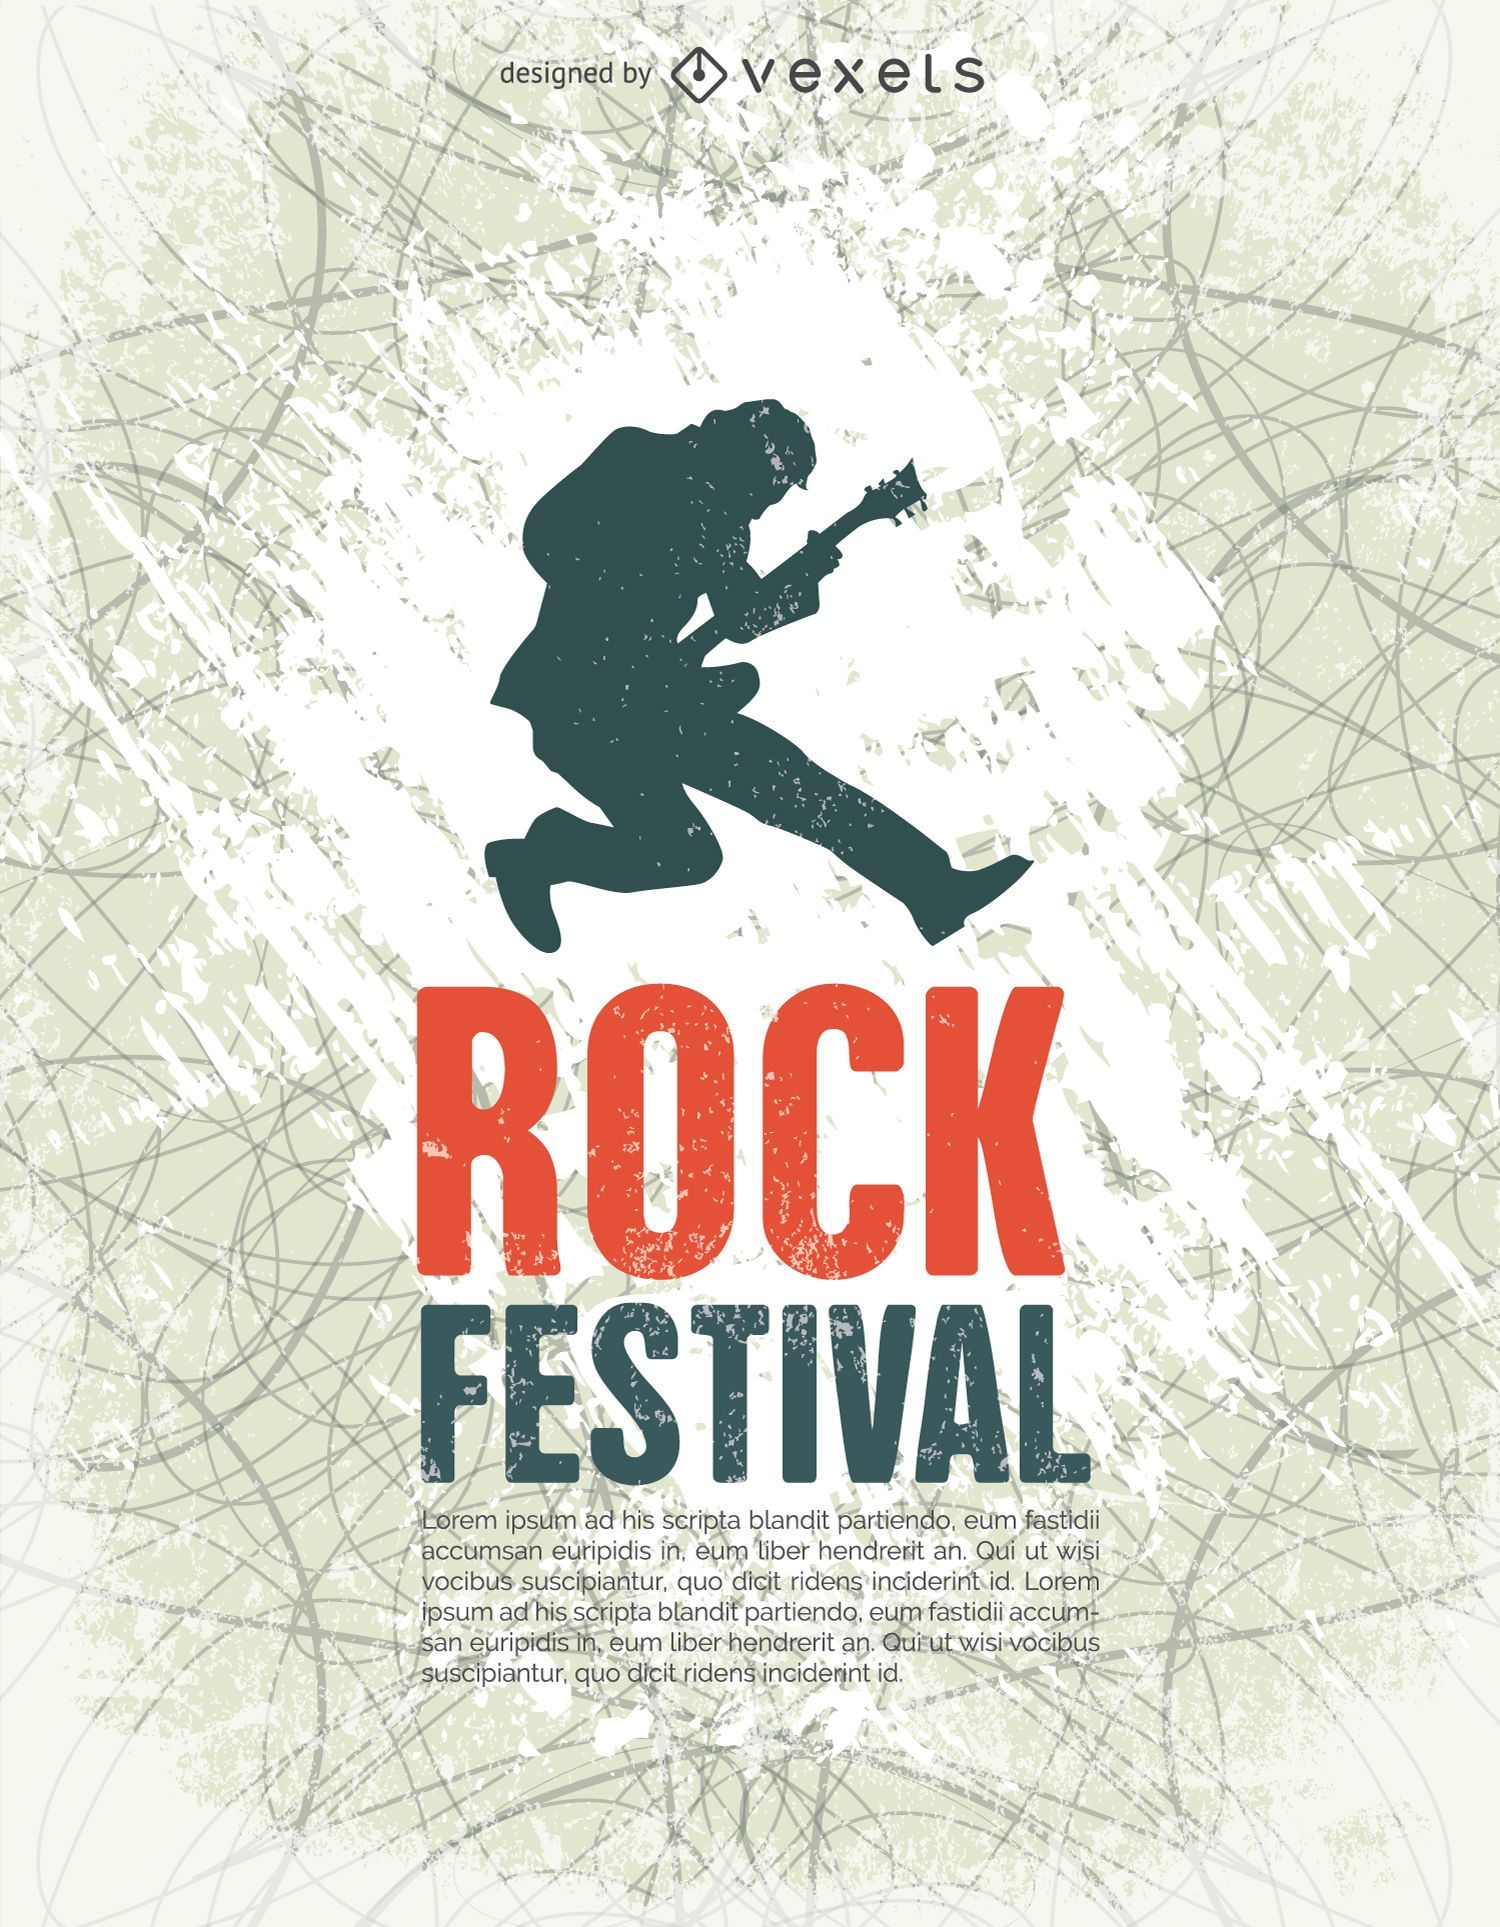 Cartel del festival de rock tempalte